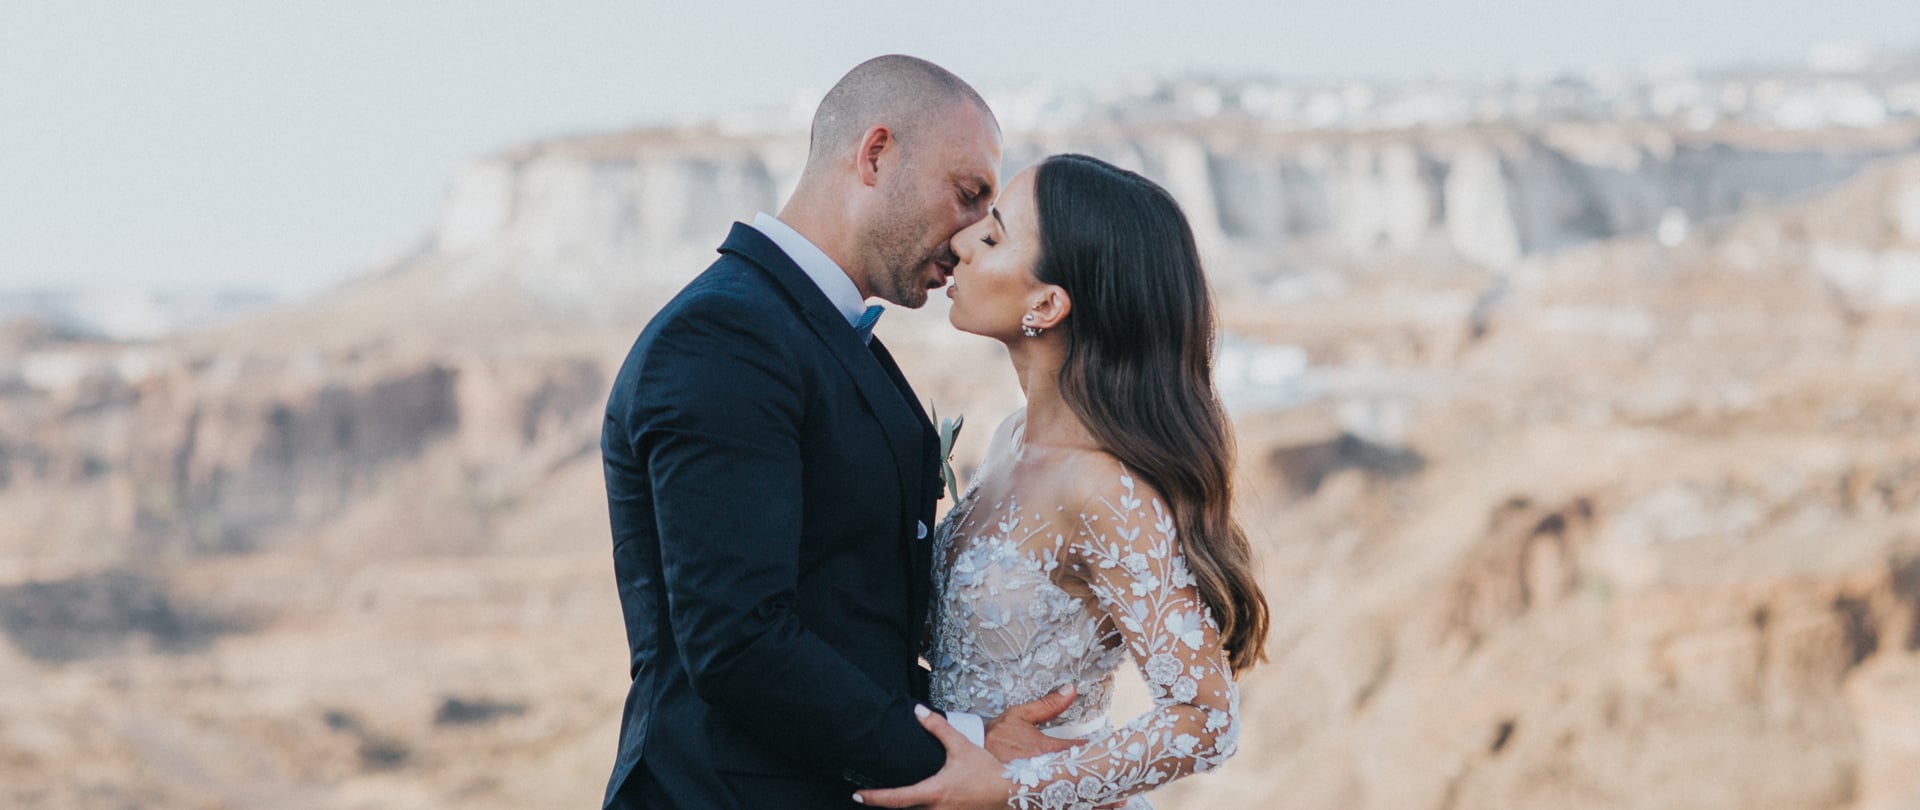 Julia & Hasan Wedding Video Filmed at Santorini, Greece